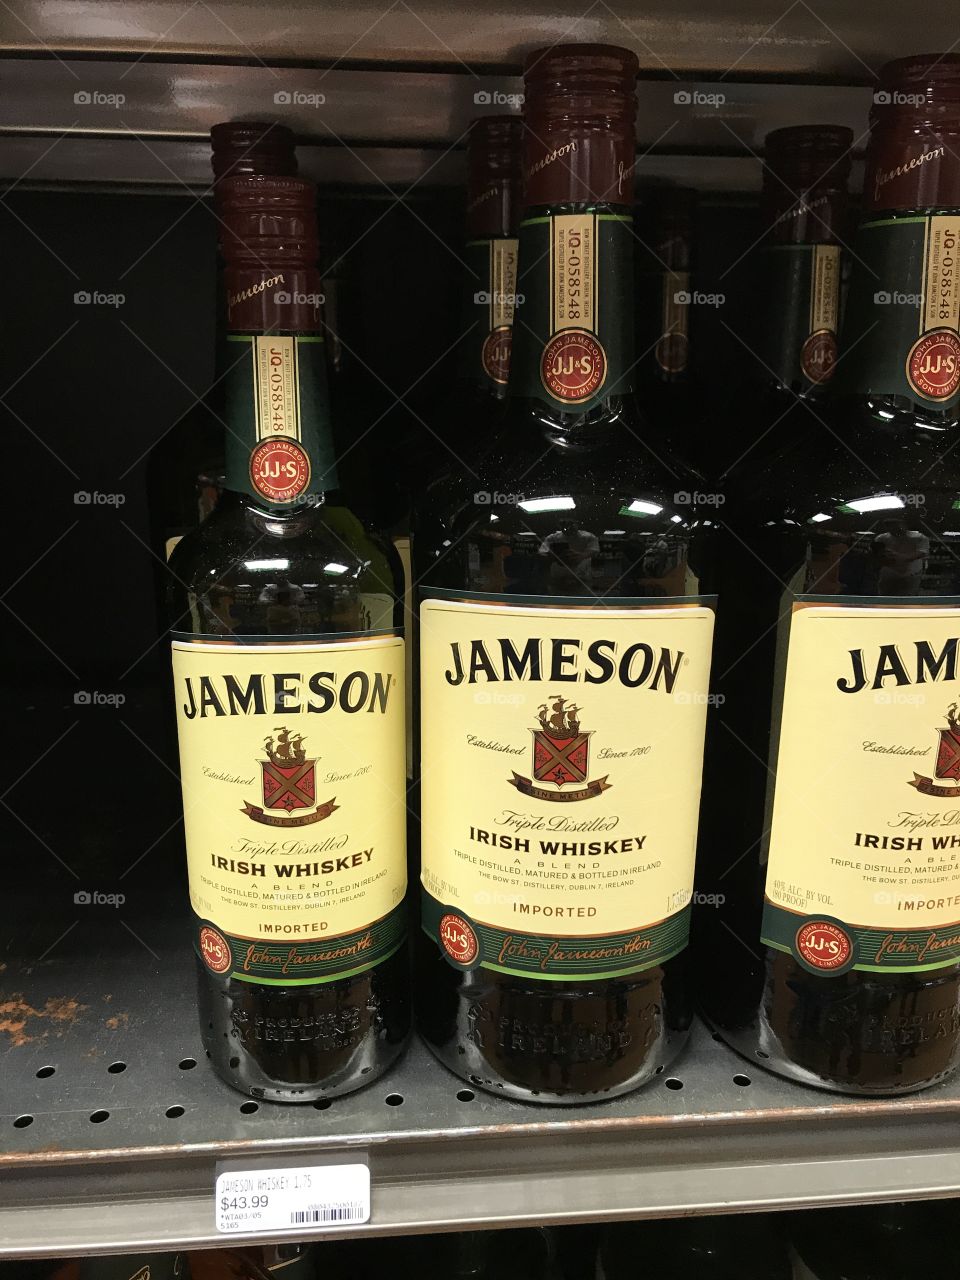 Jameson Whisky
